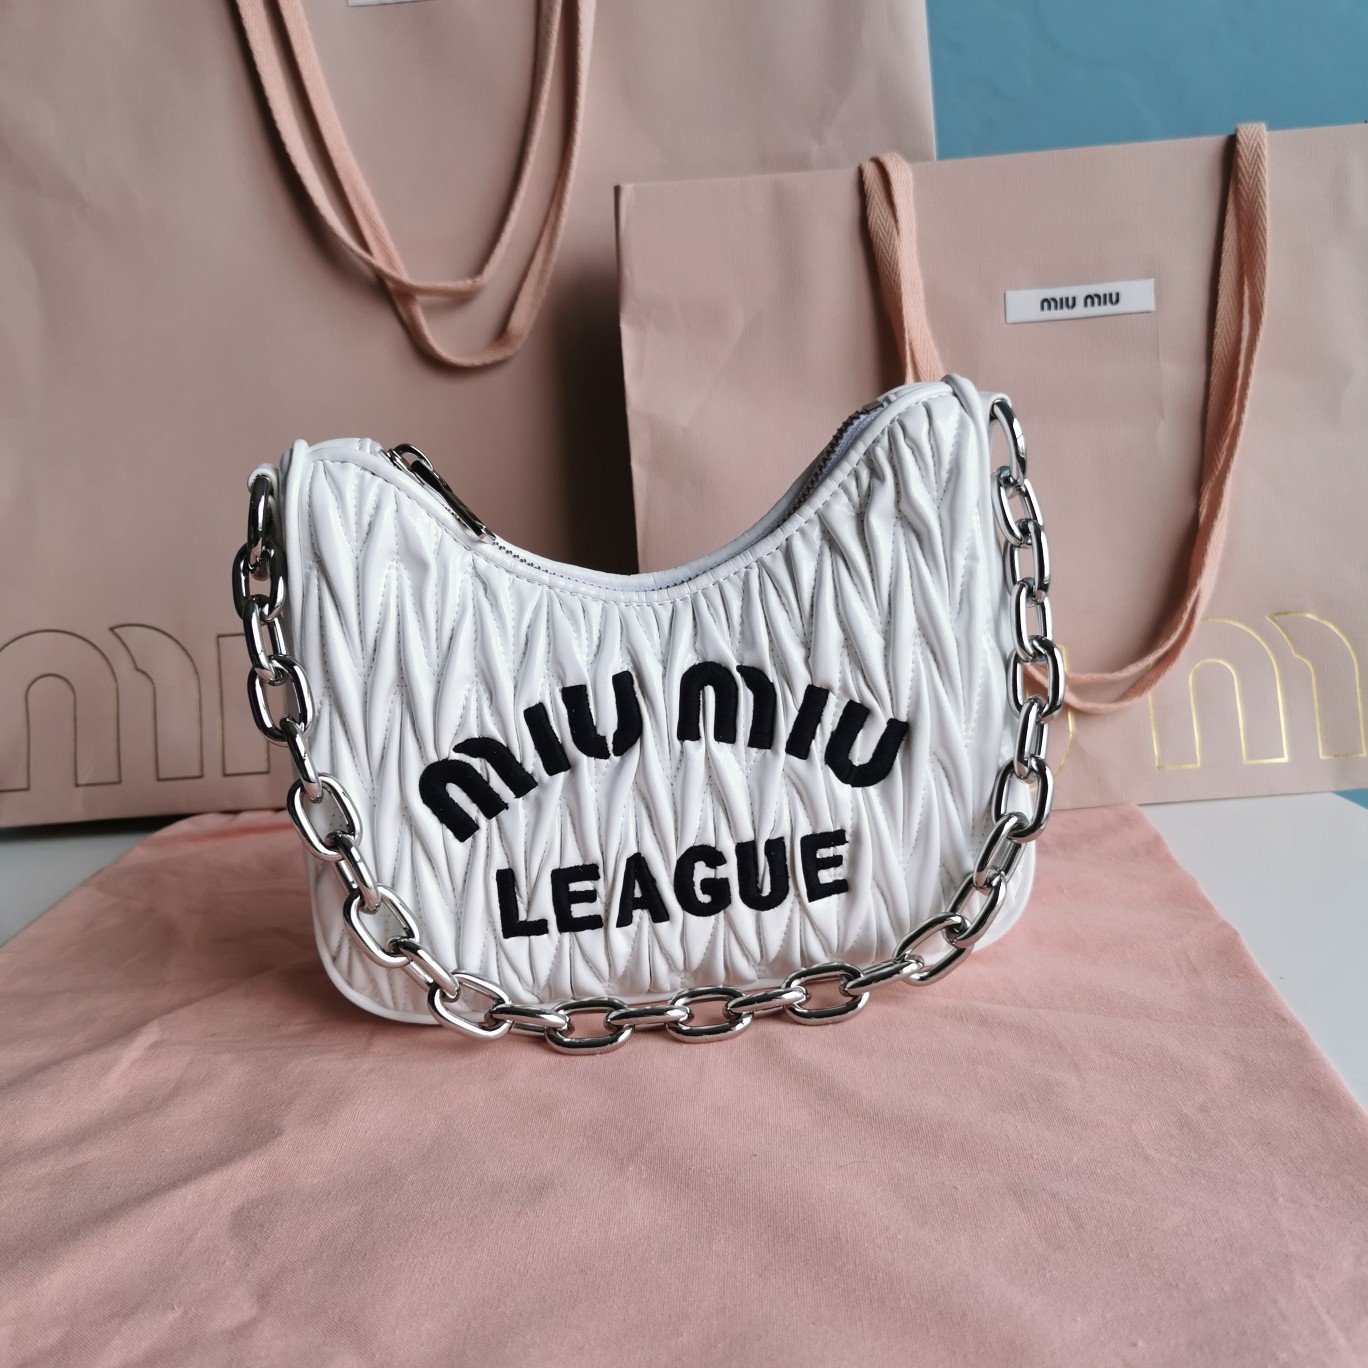 Wholesale Cheap MIU MIU Aaa bags for Sale